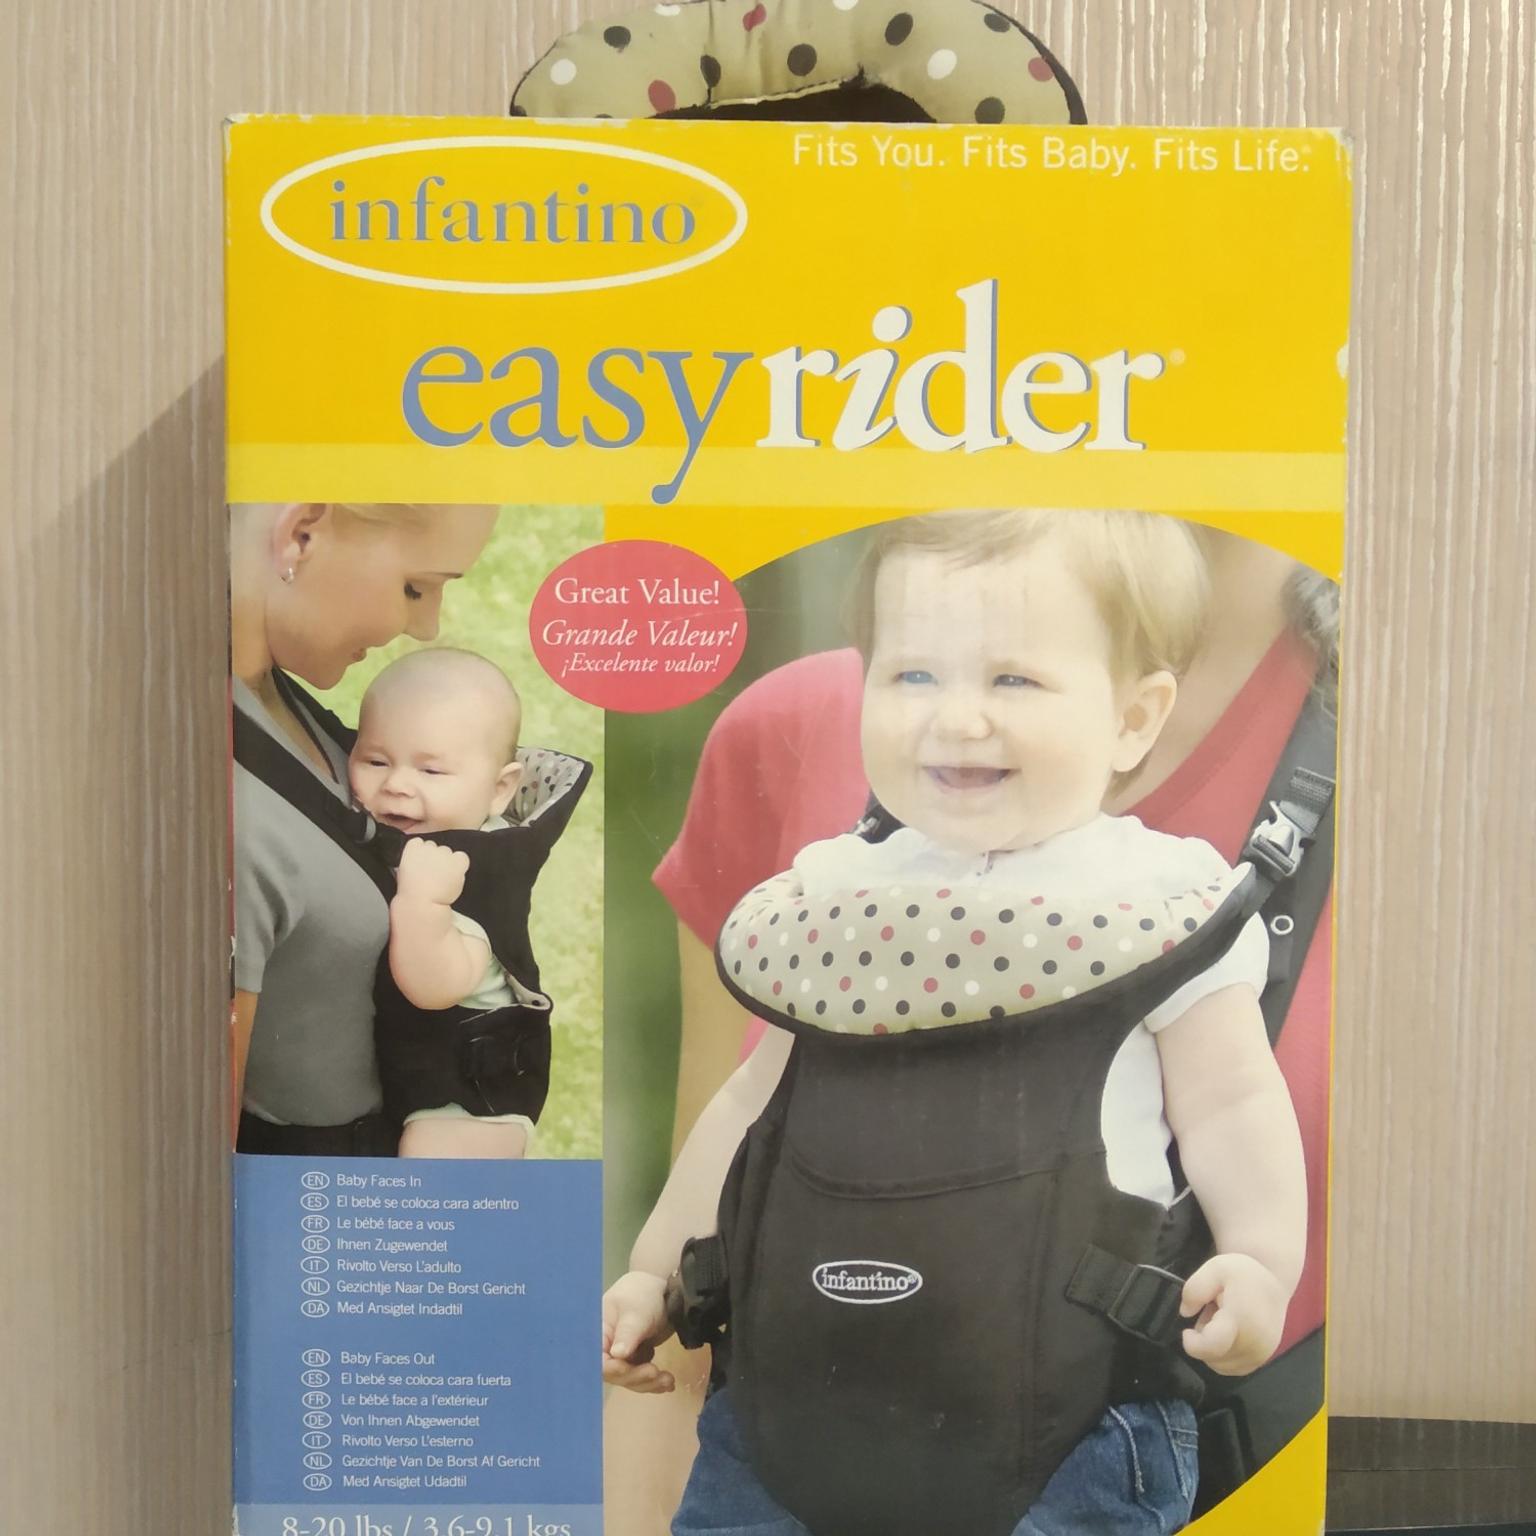 infantino easy rider